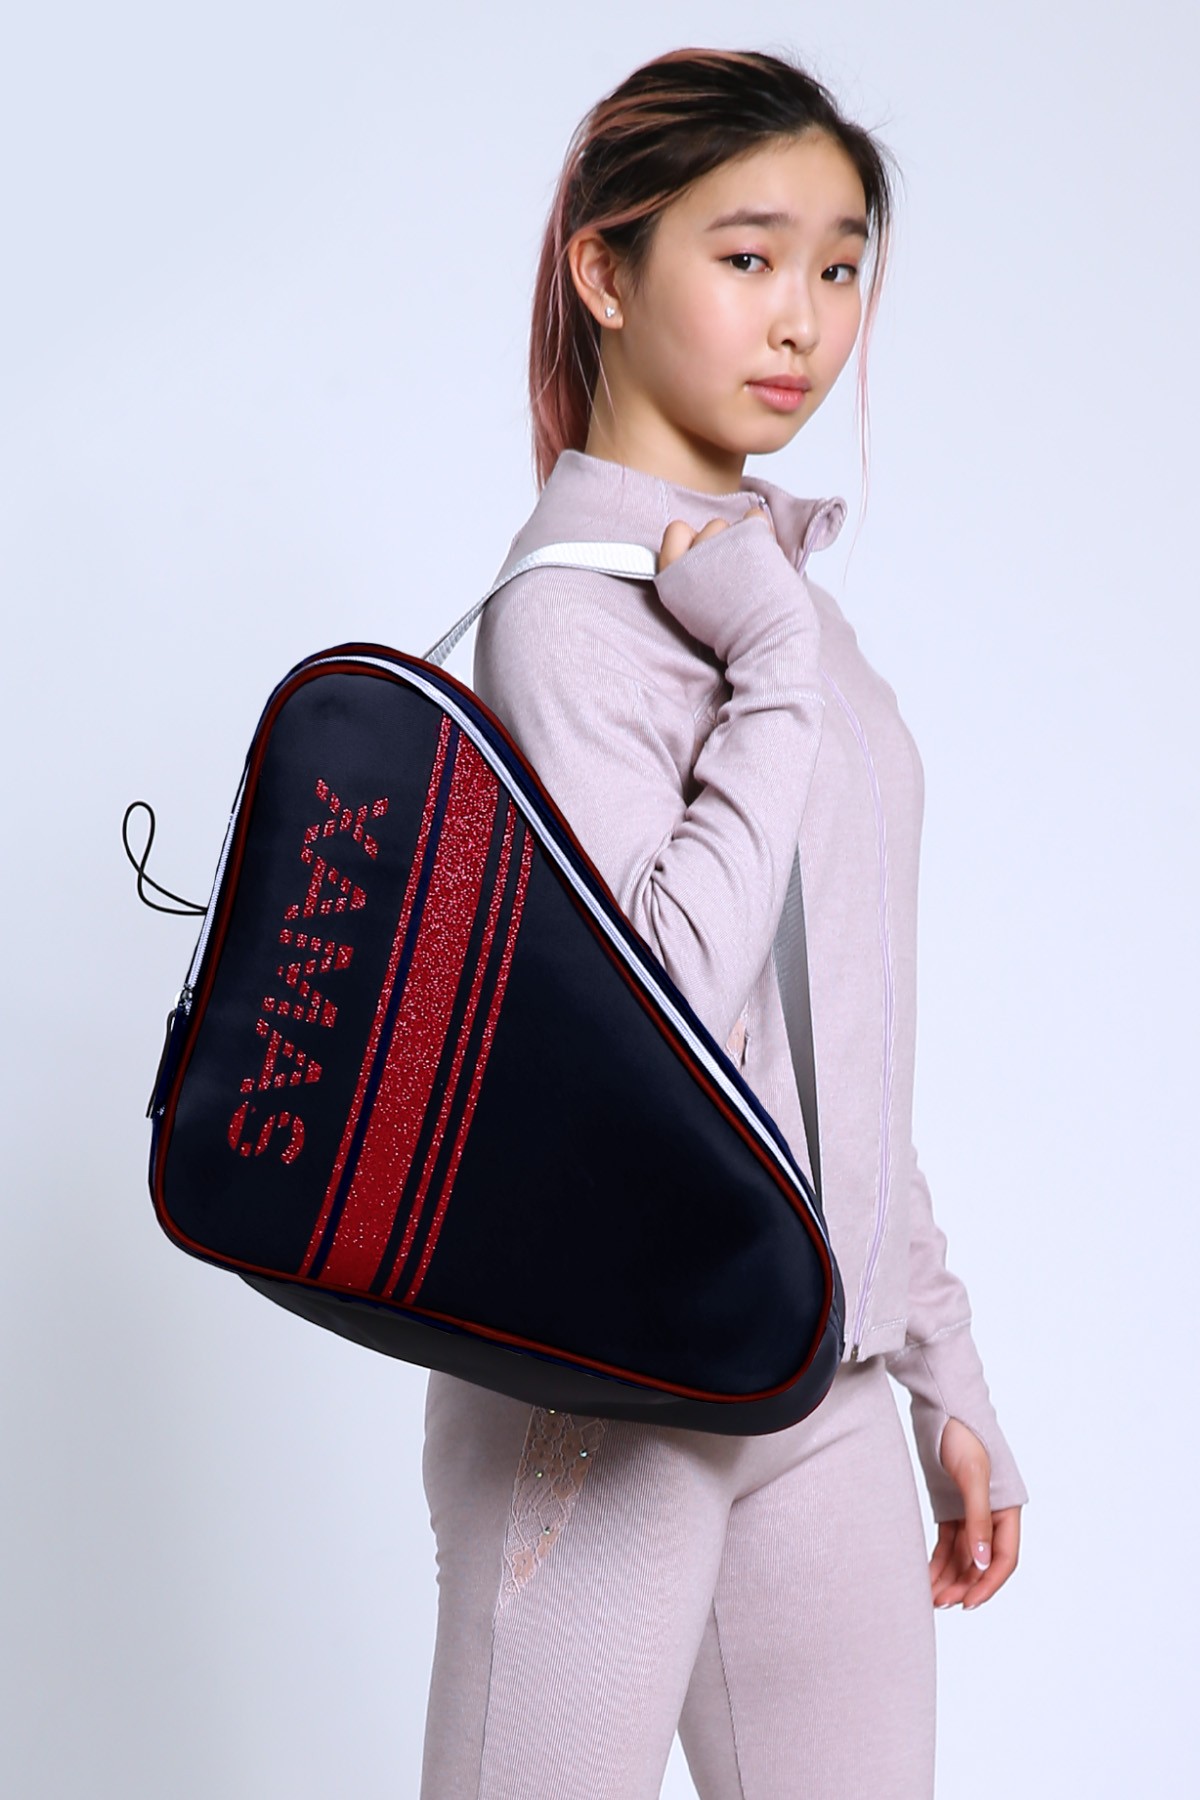 Premium Pro XAMAS De Luxe Skate Bag- - Royal Blue Red Glitter